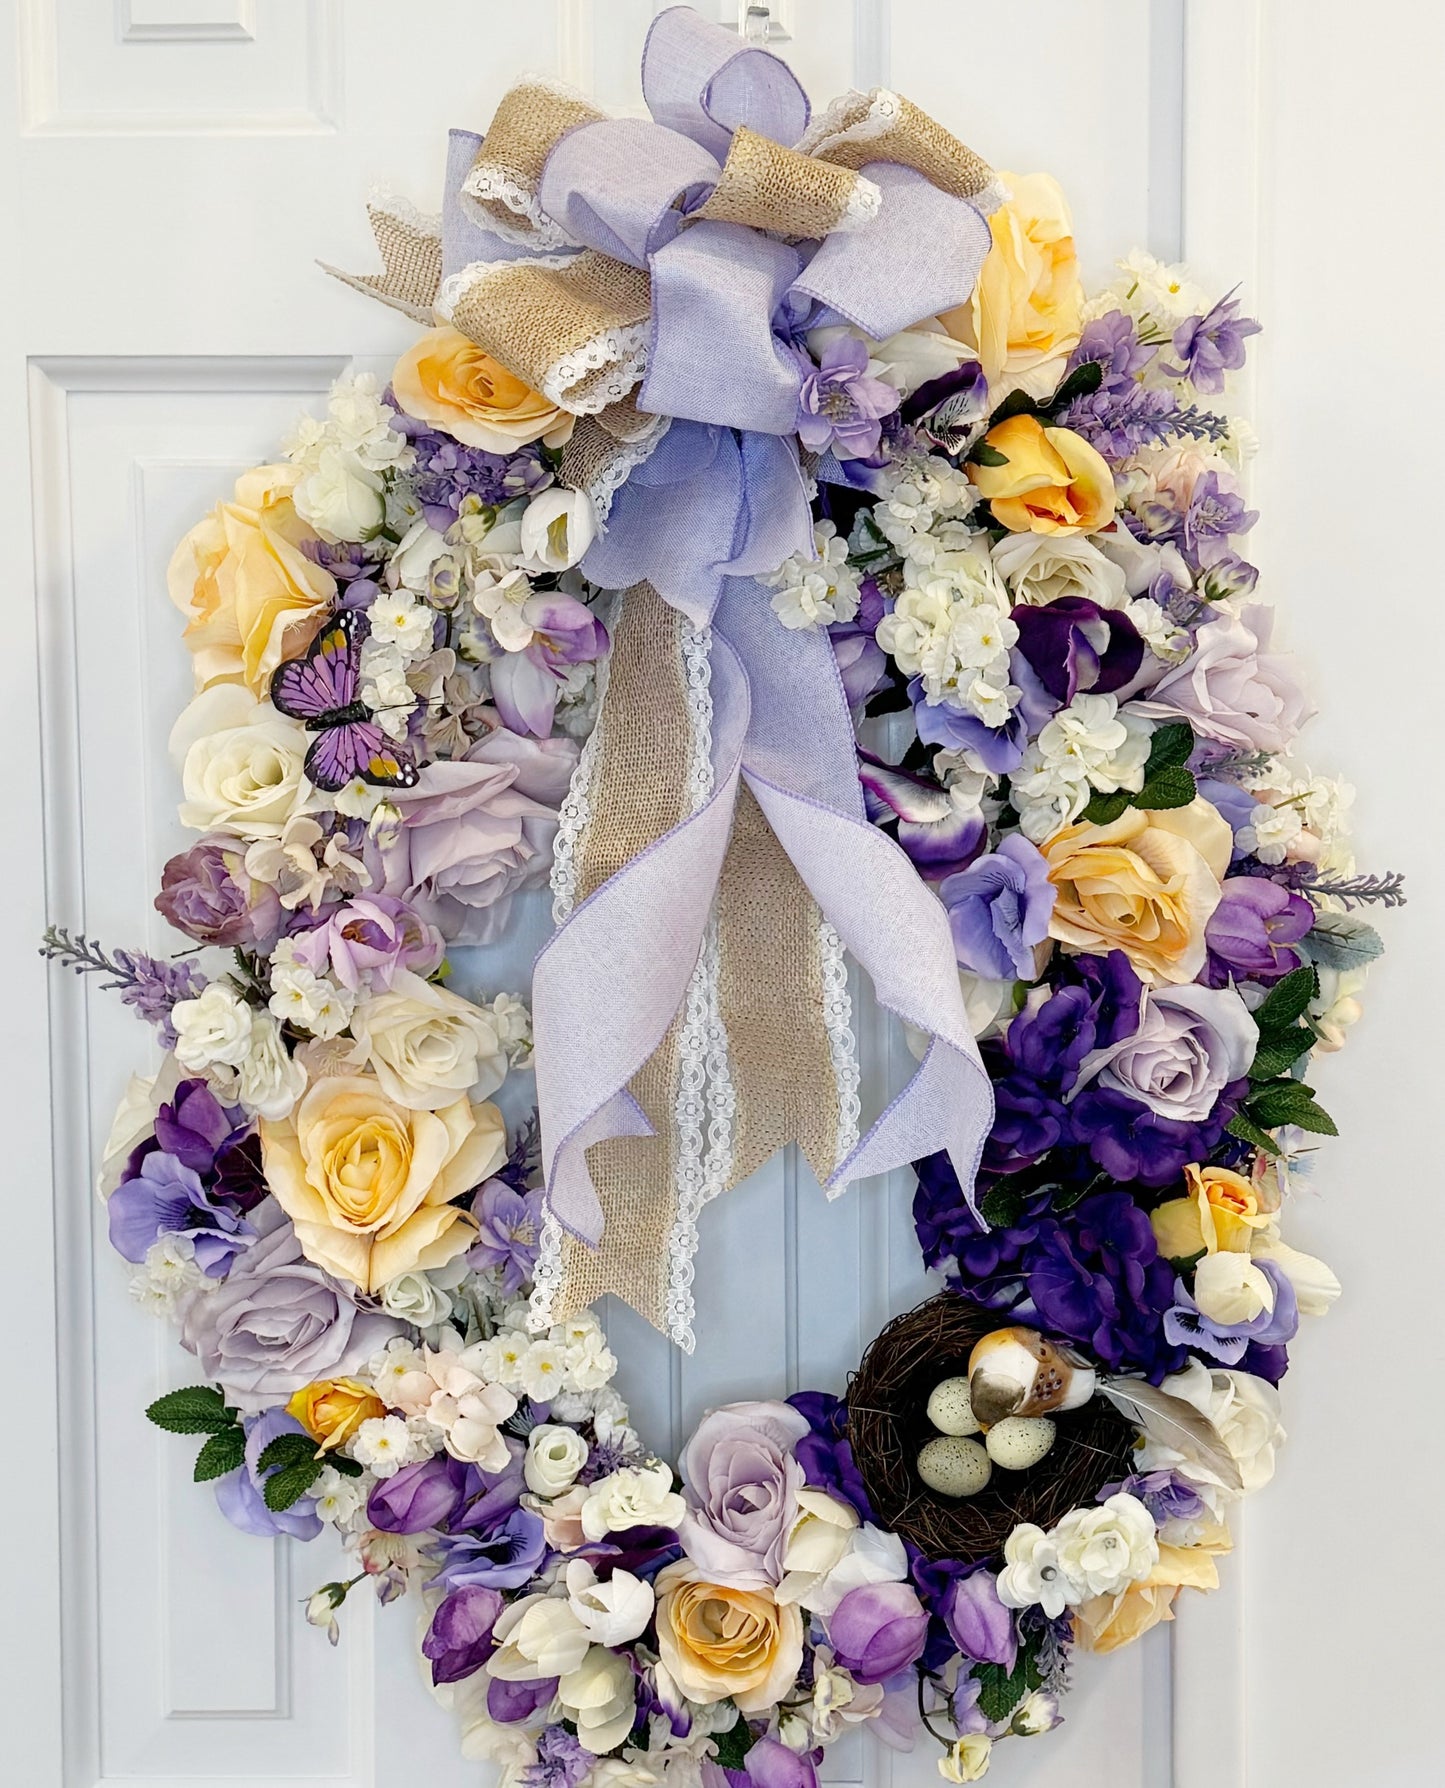 24" Oval Peach, Purple, and White Wreath